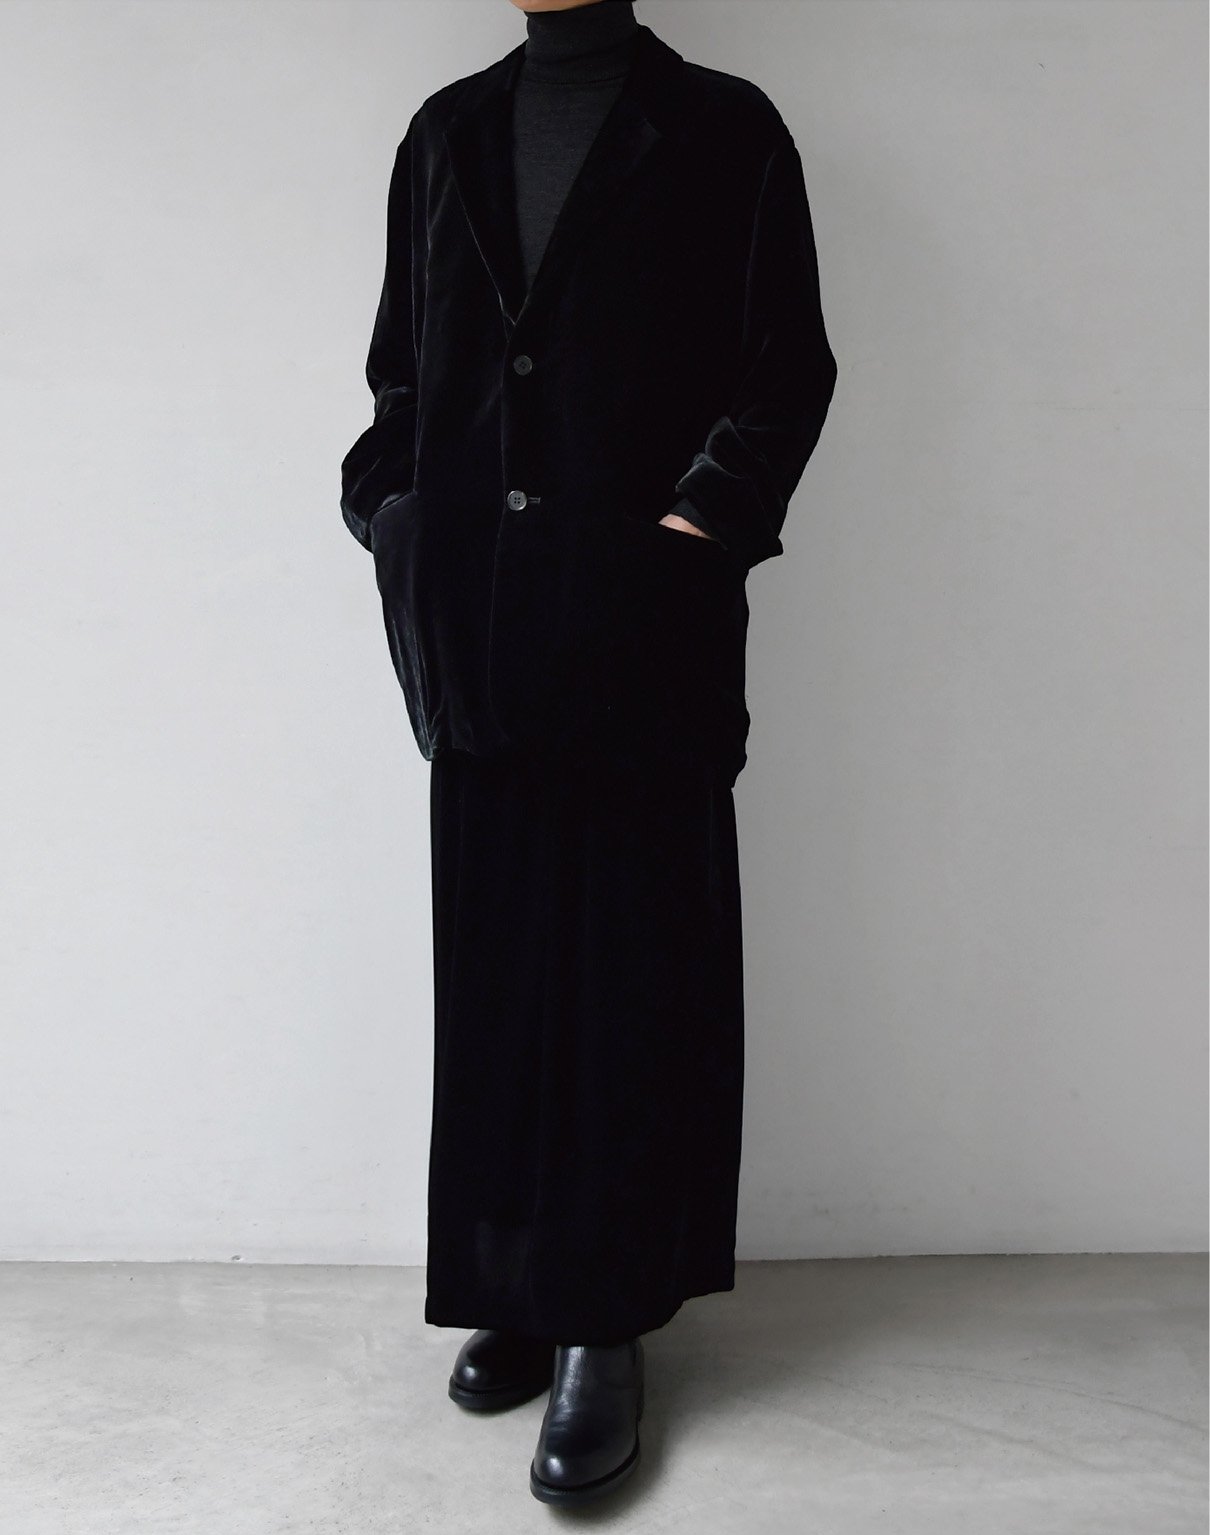 WIRROW velvet soft jacket black